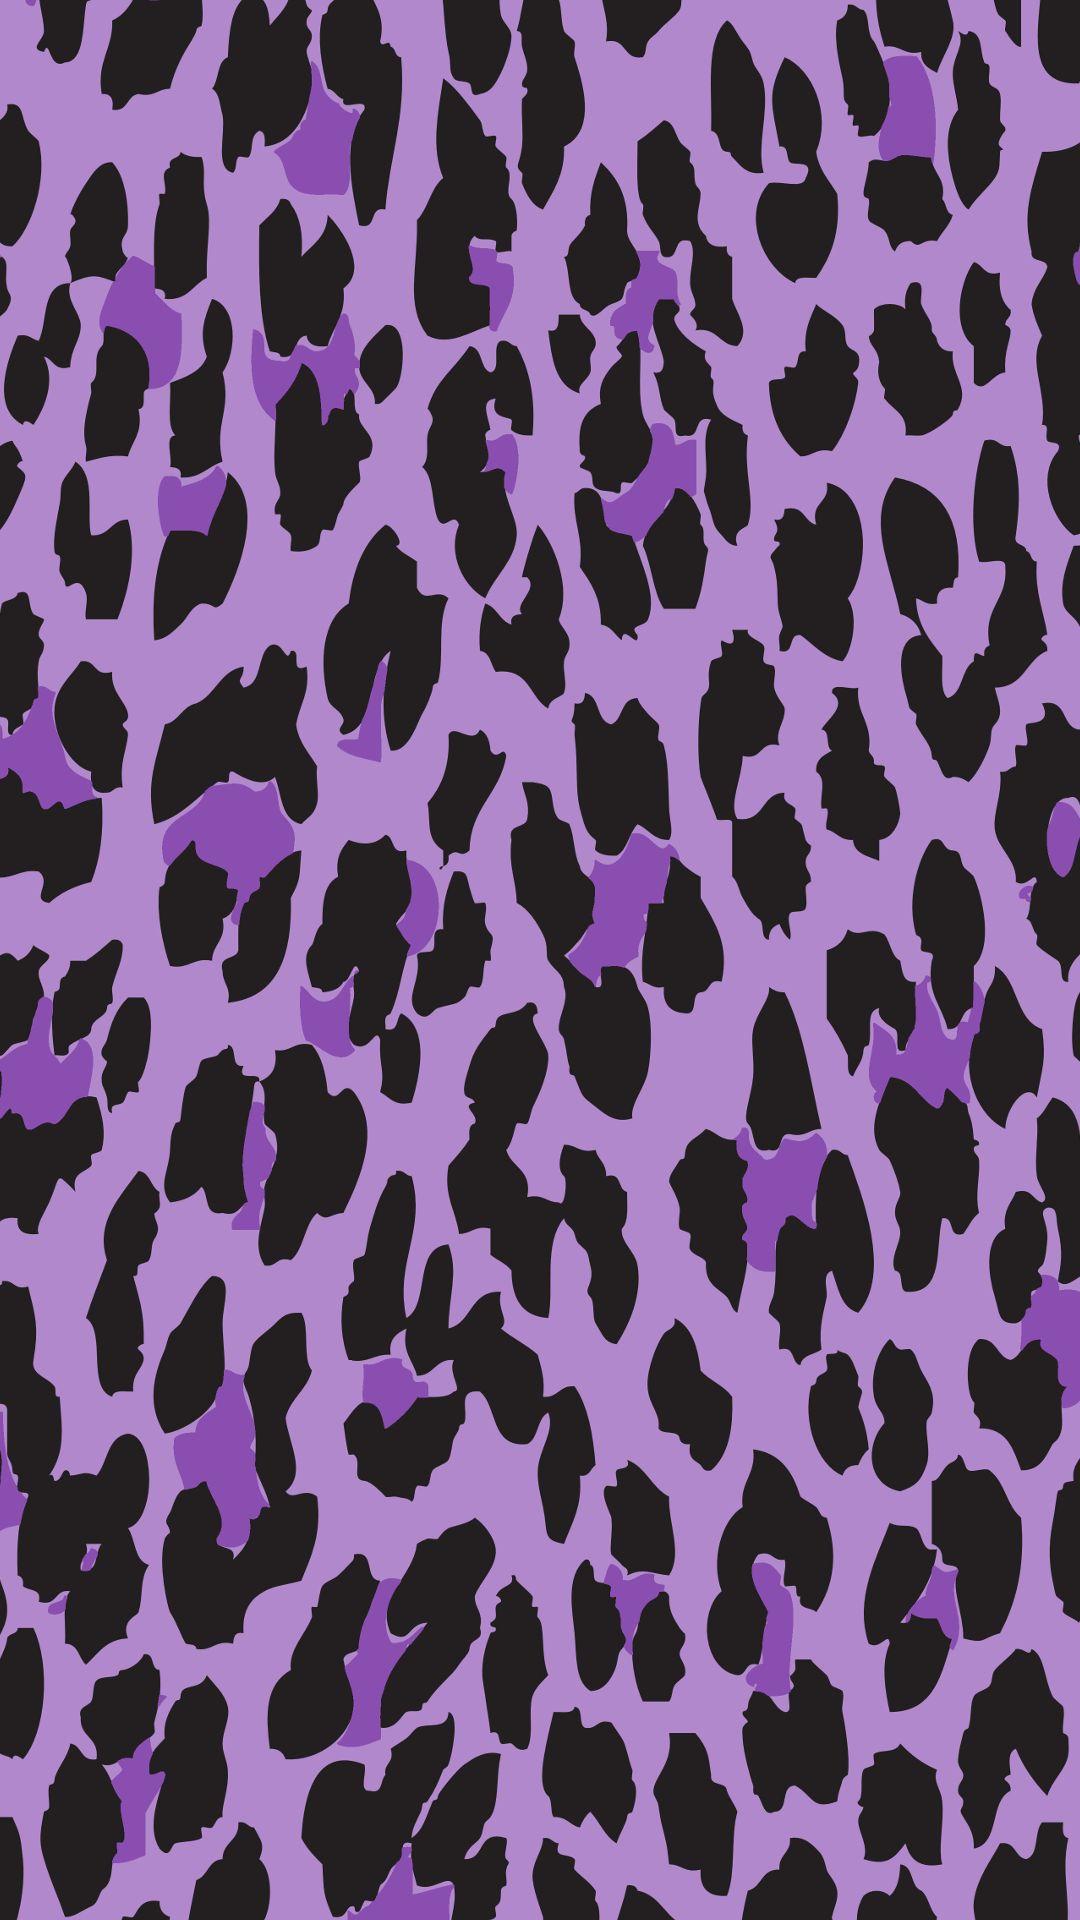 giraffe print wallpaper for iphone